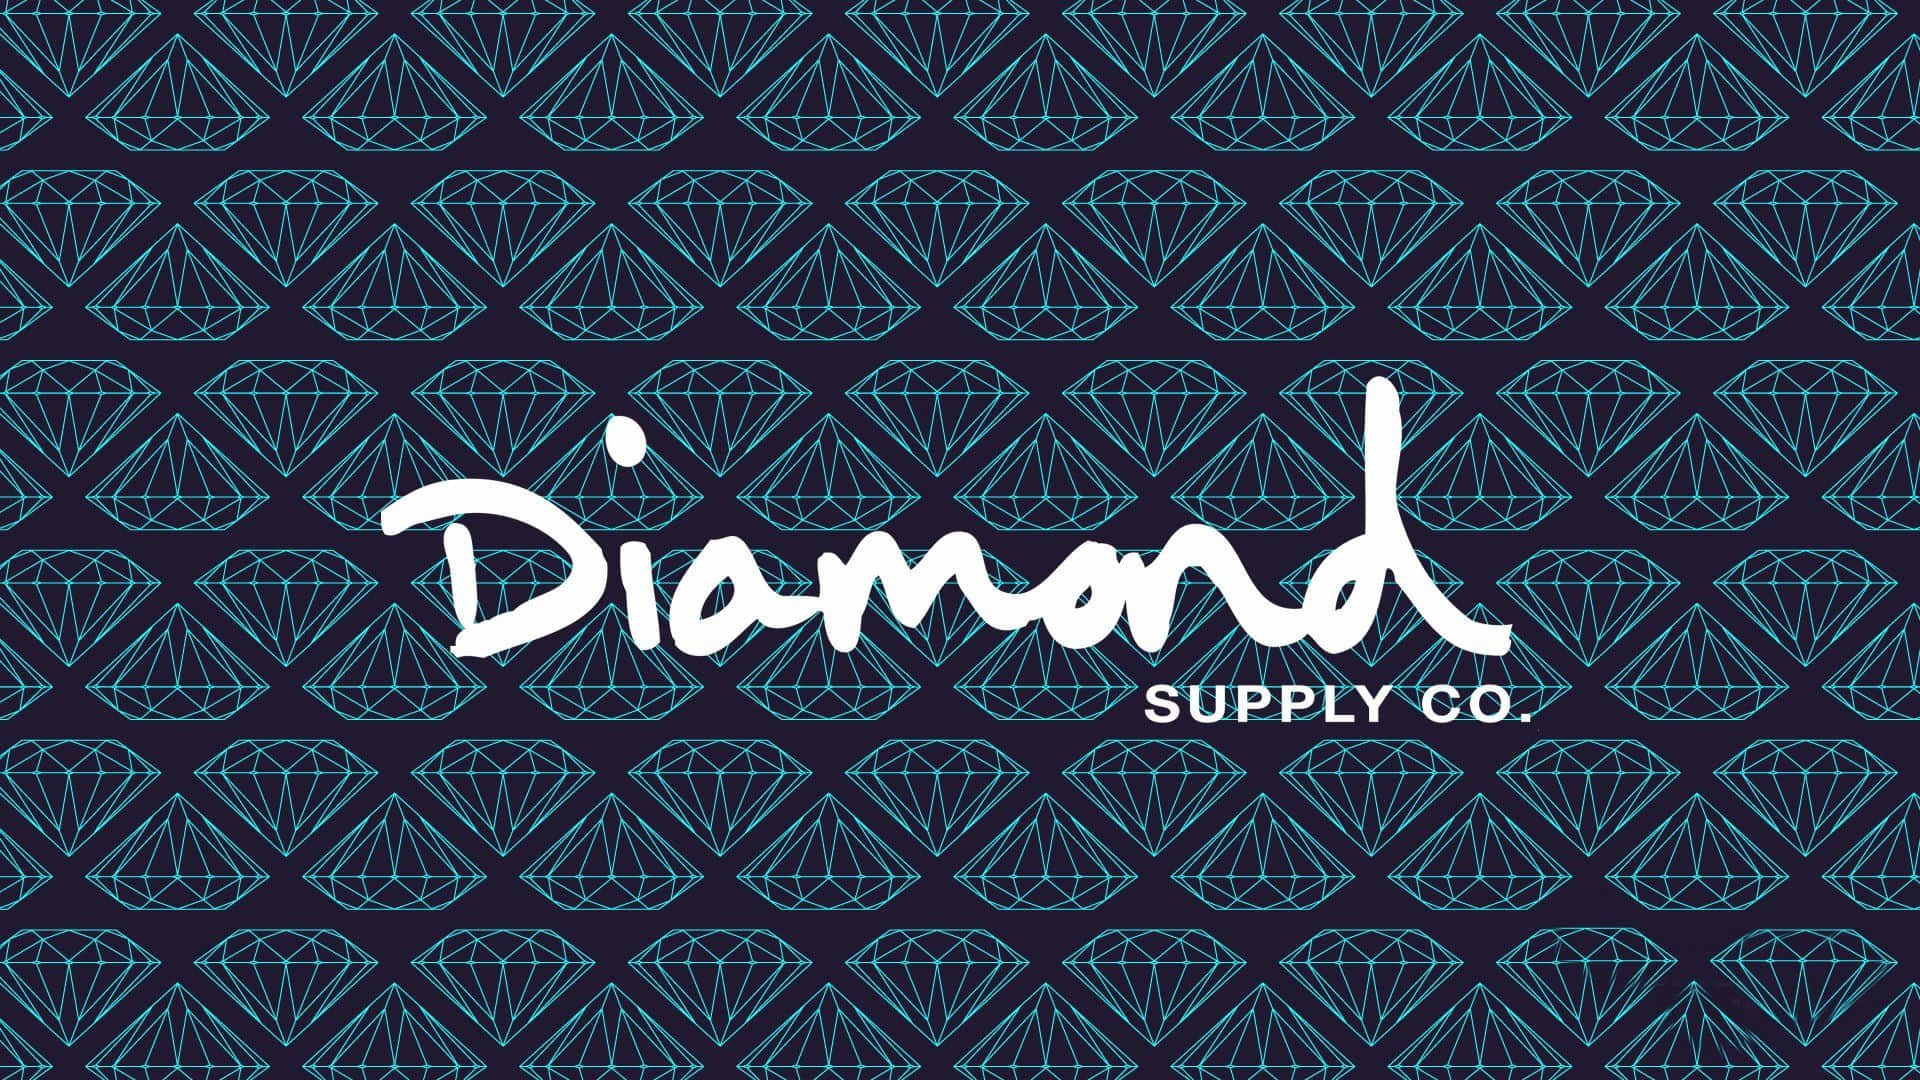 Bilddiamond Supply Co Logo Wallpaper